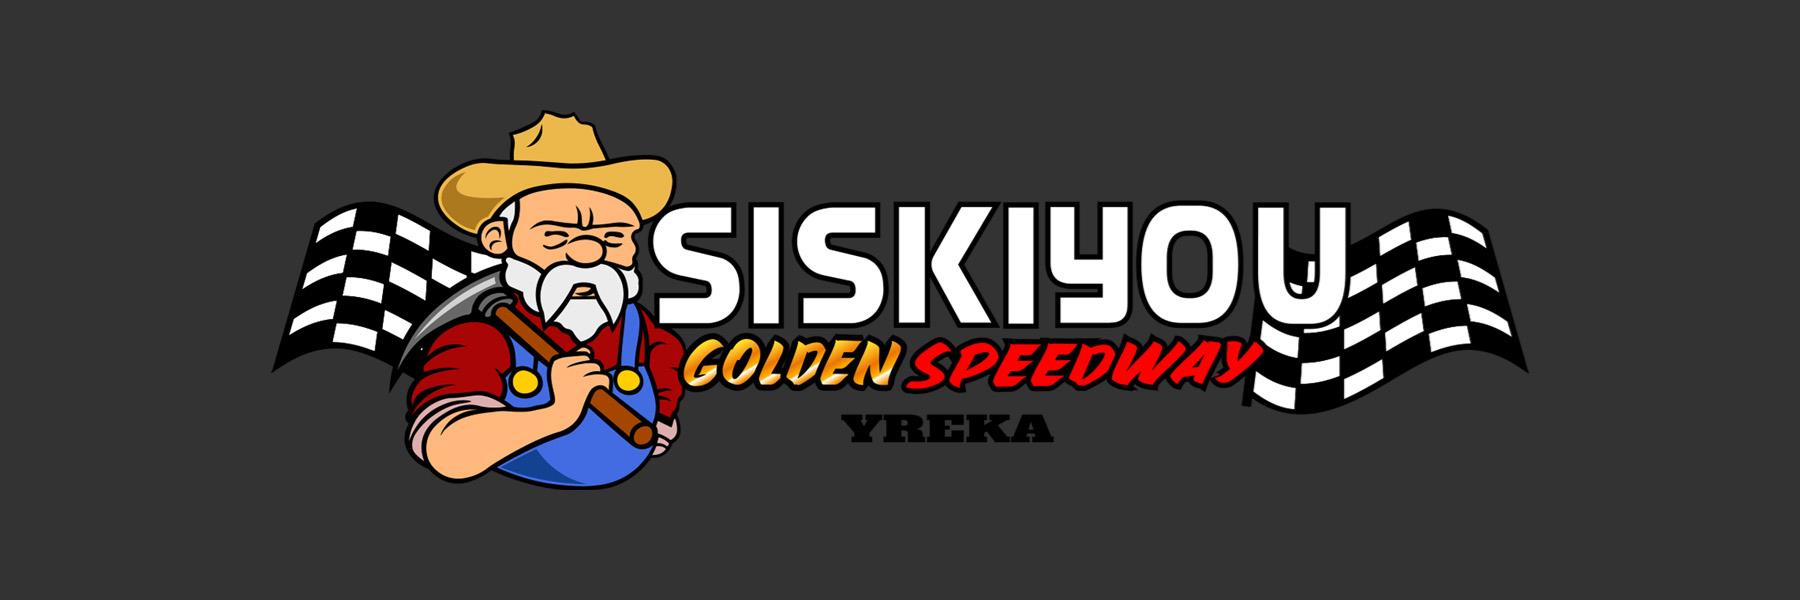 9/25/2021 - Siskiyou Golden Speedway